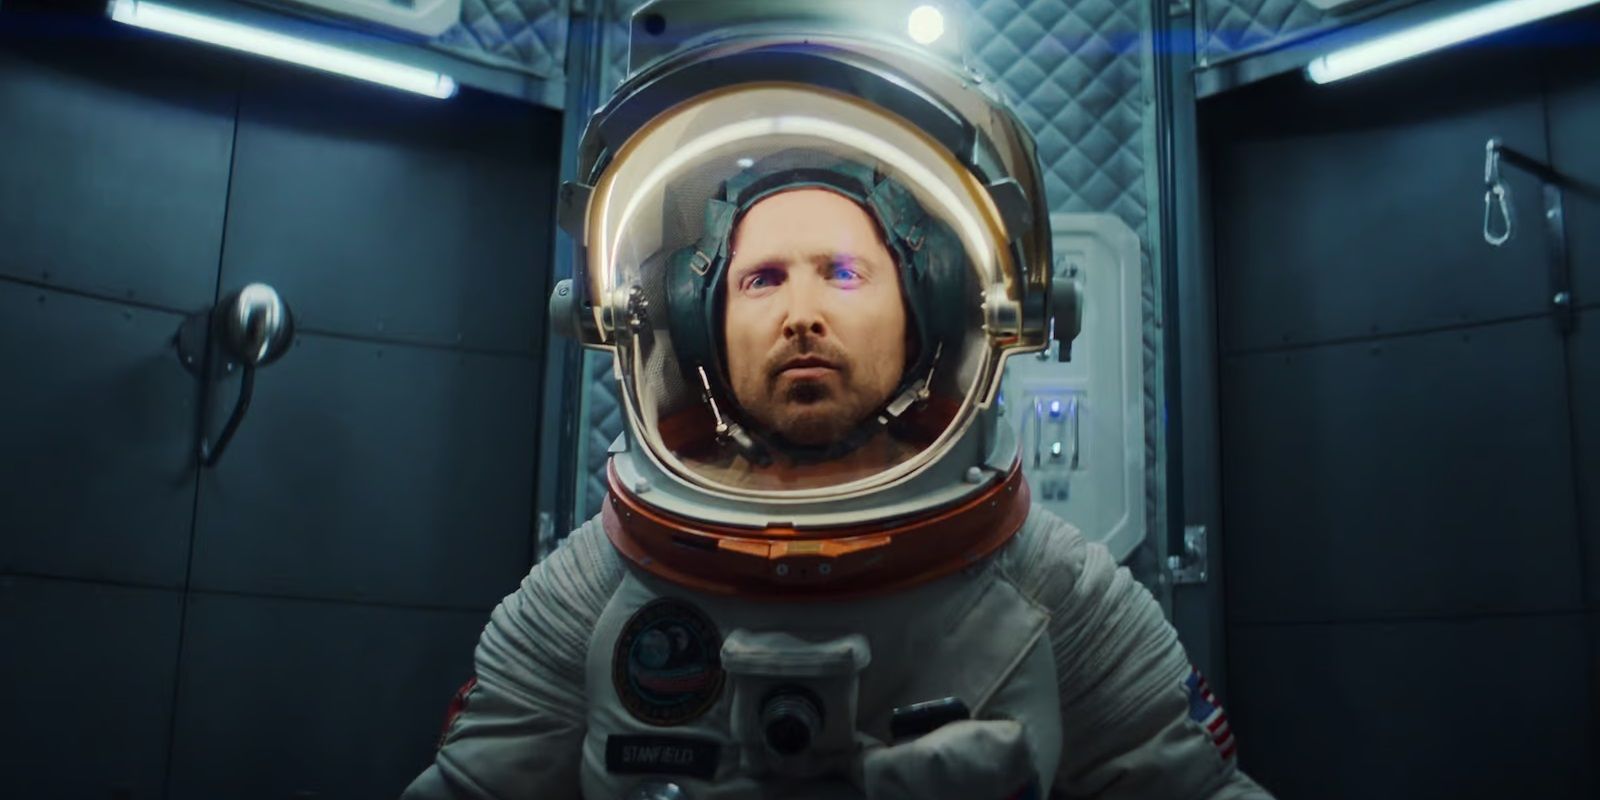 Aaron Paul in a space suit in Black Mirror